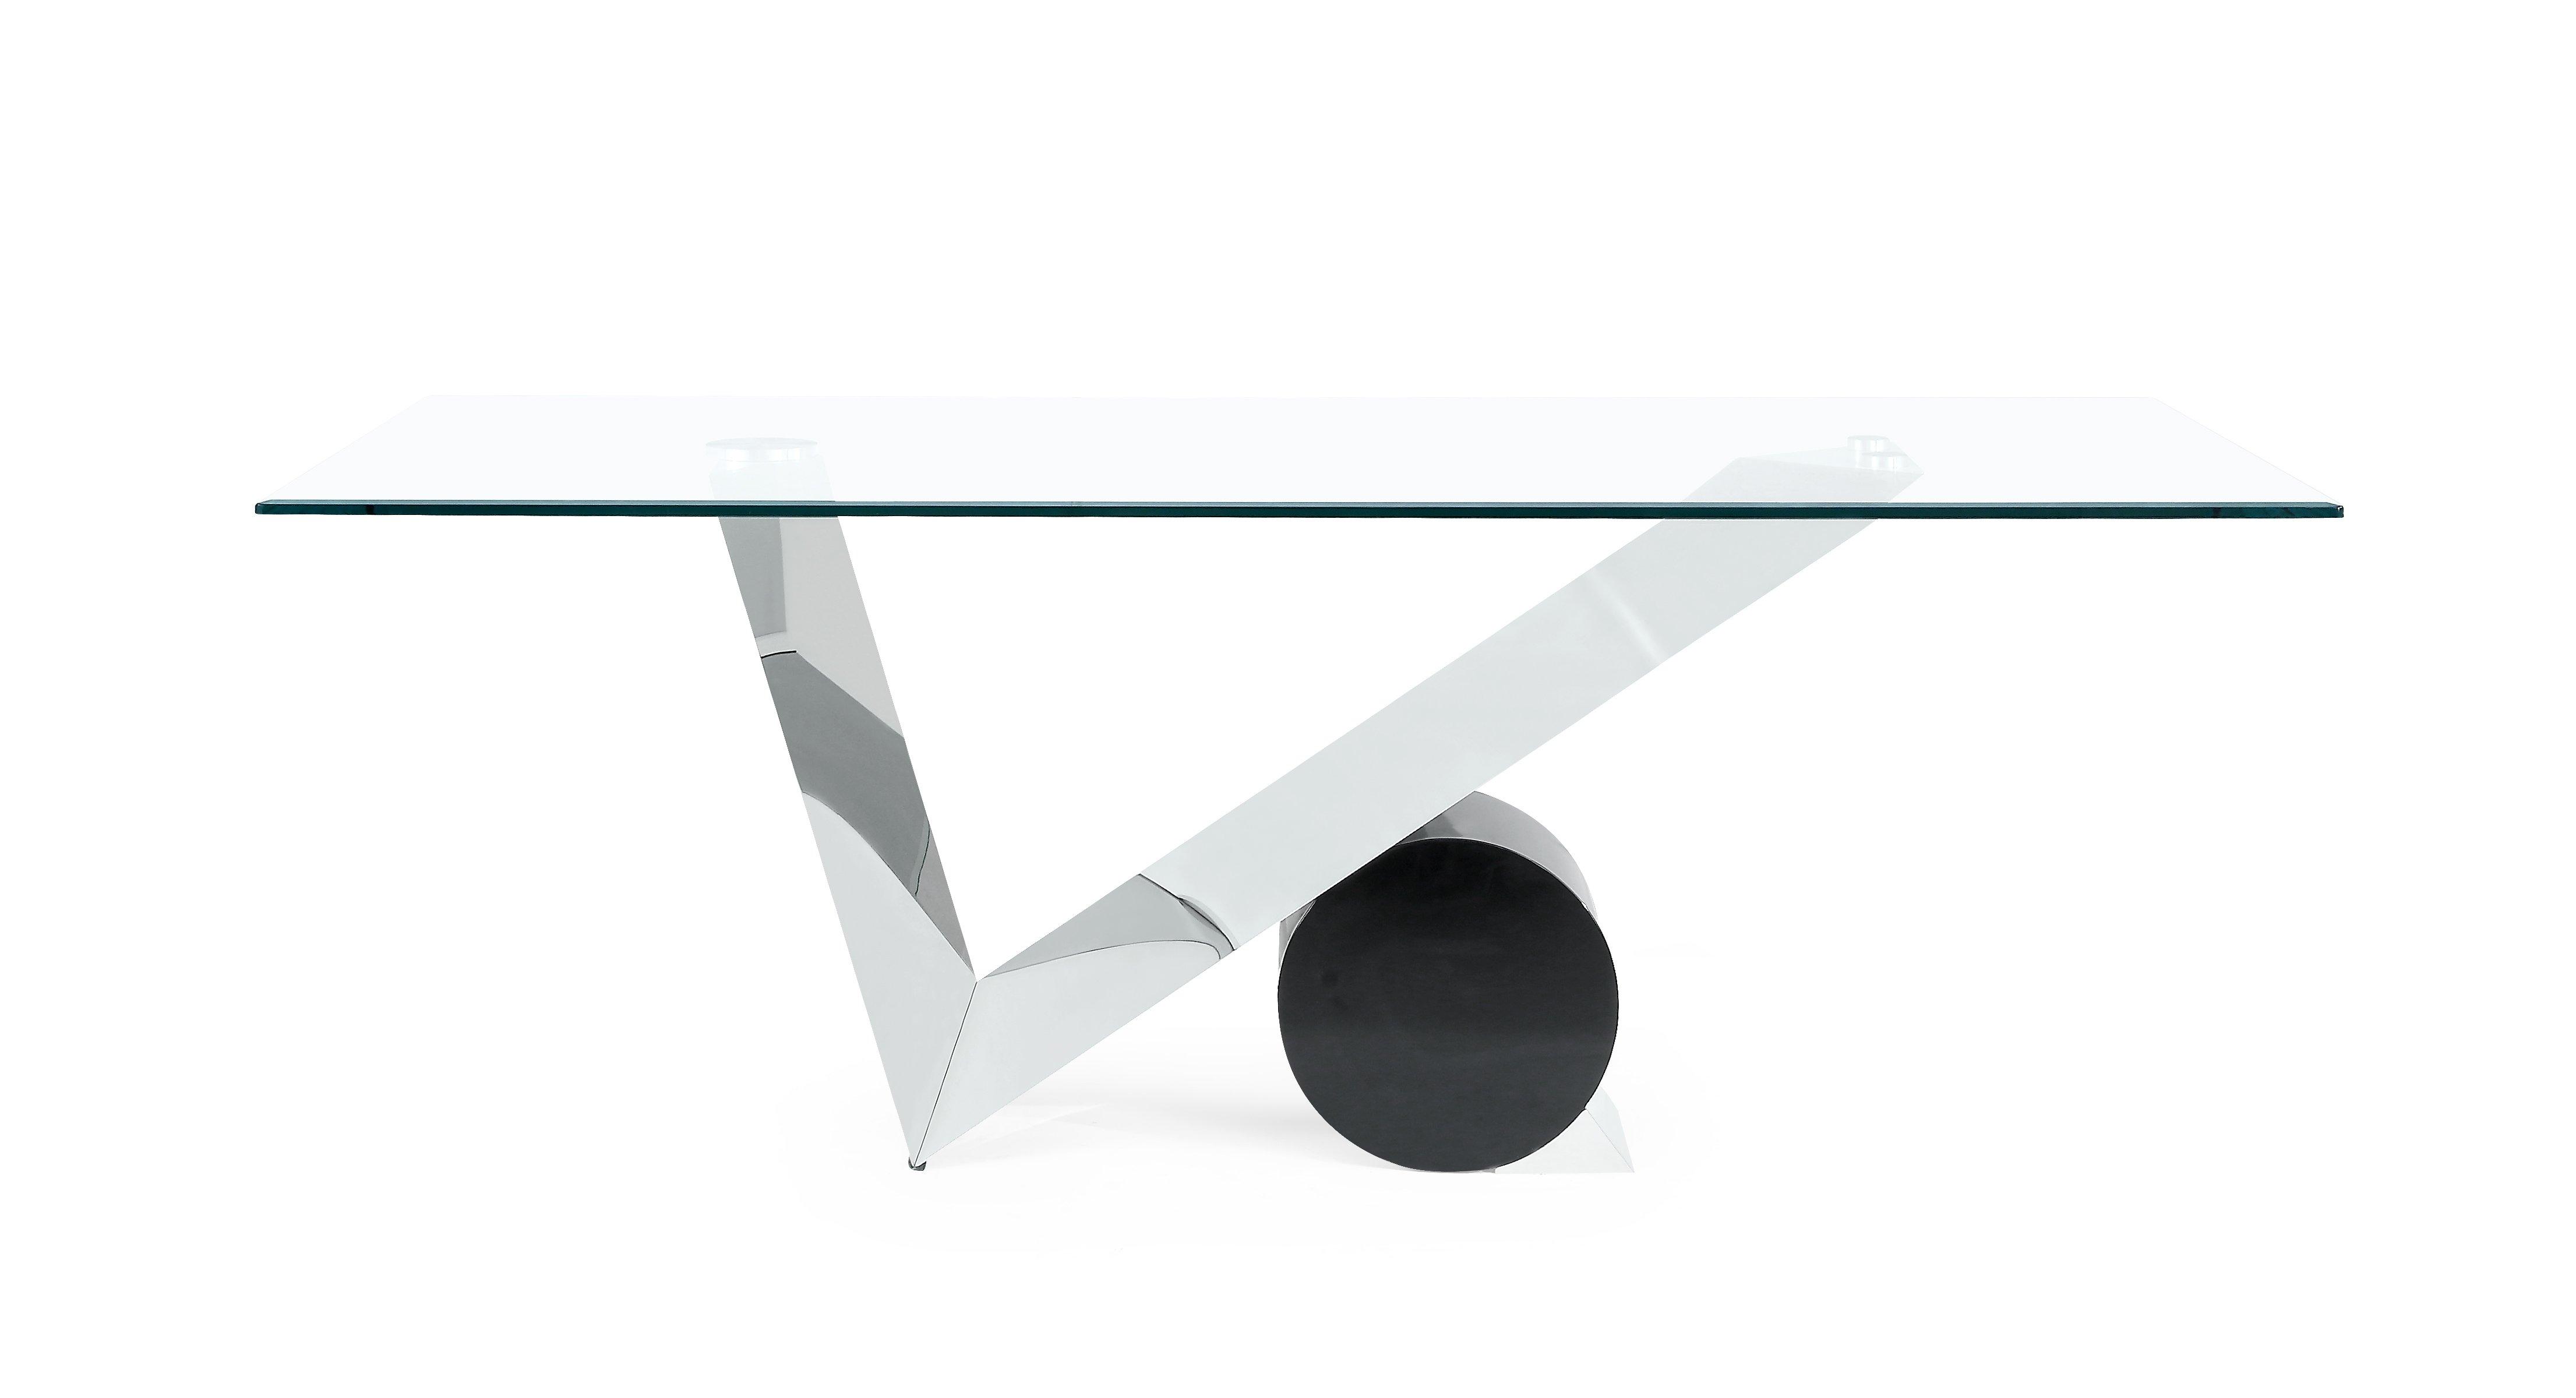 

    
Global Furniture D987DT W/D9902DC-BL Glass Top Table & Black PU Chair Dining Set 5 Pcs
